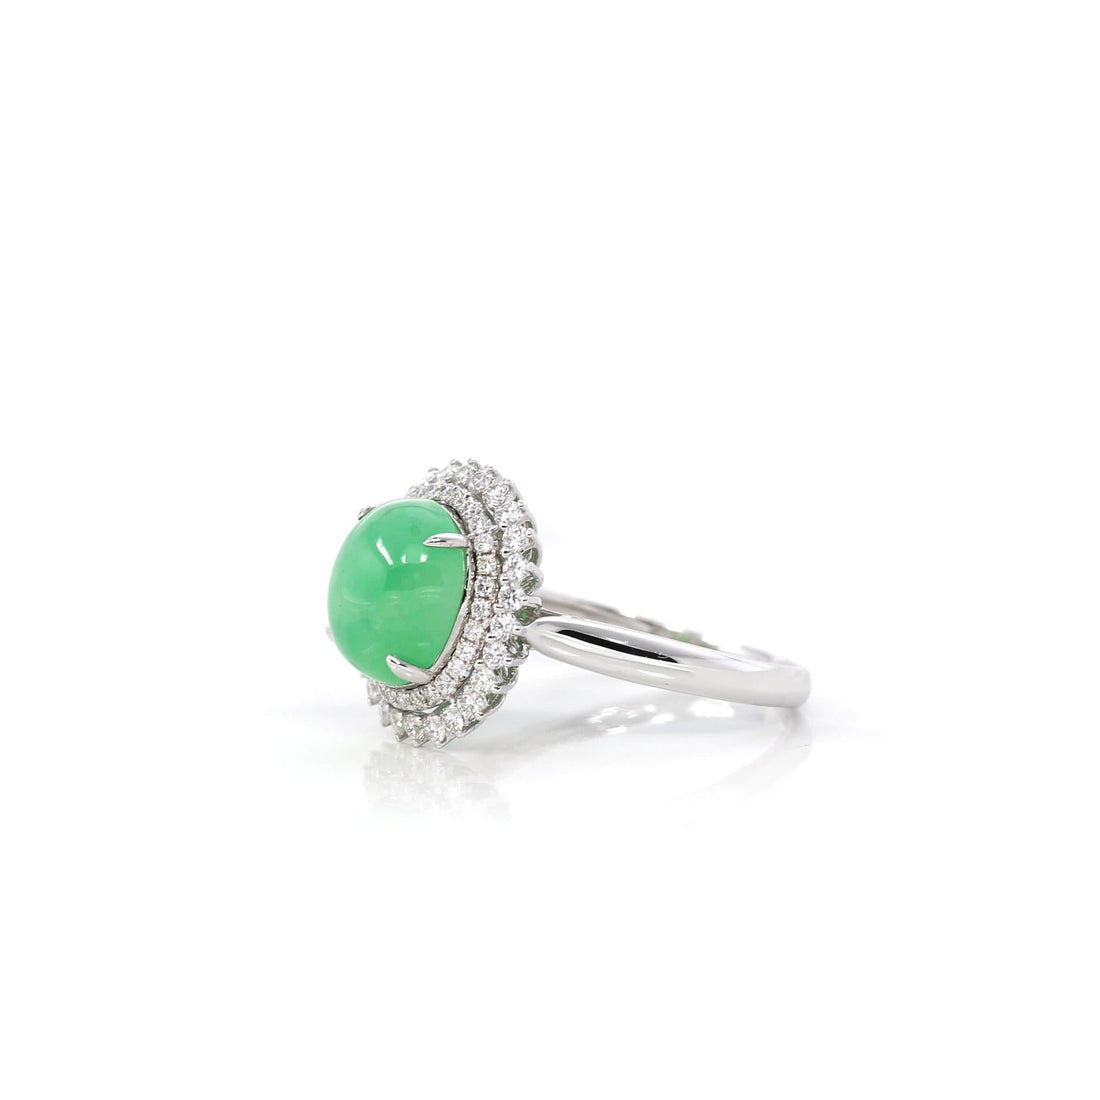 Baikalla Jewelry Jadeite Engagement Ring 18k White Gold Natural Imperial Green Jadeite Jade Engagement Ring With Diamonds